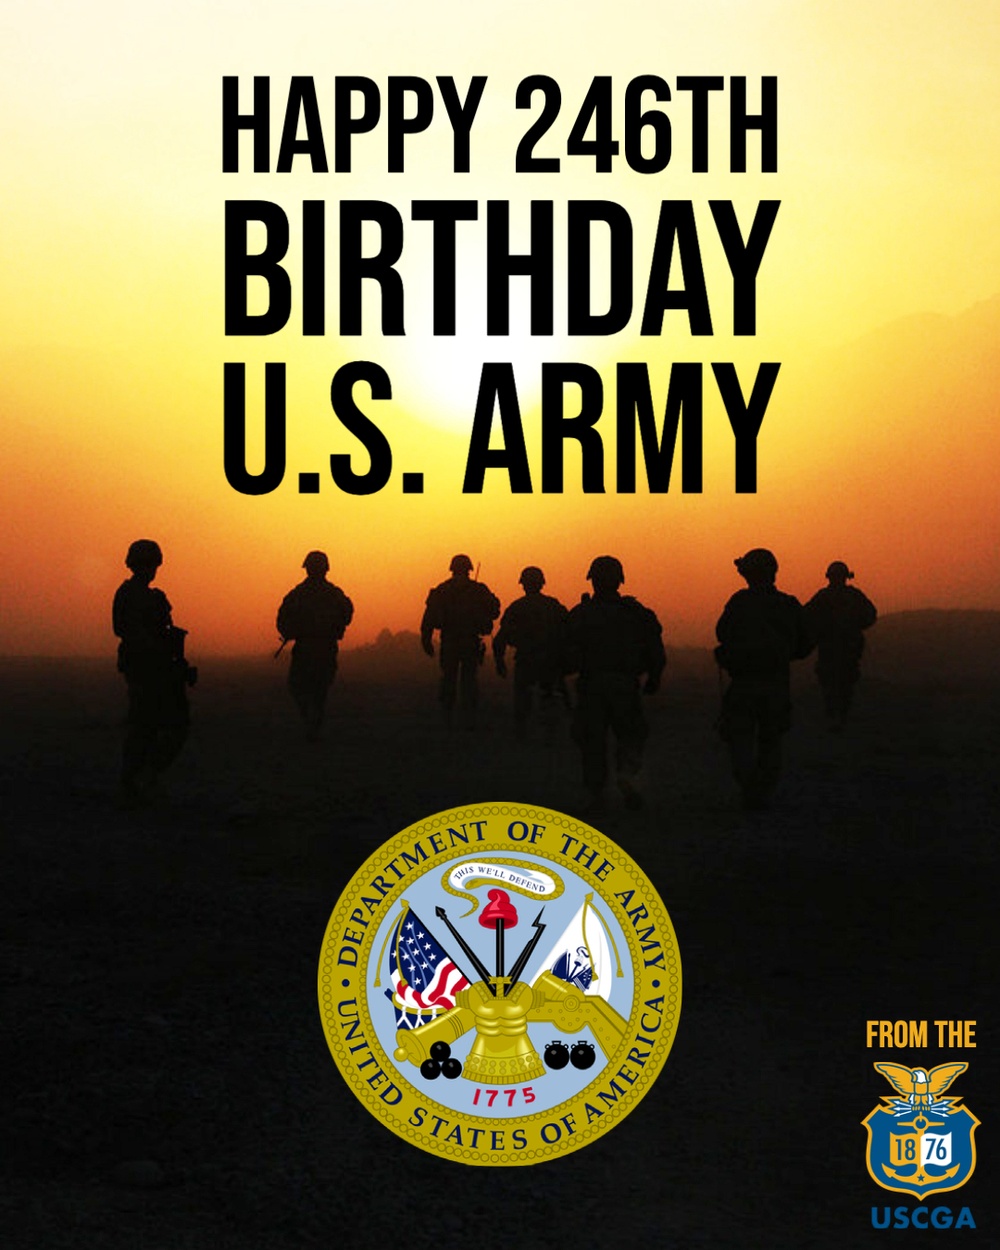 Army Birthday Graphic